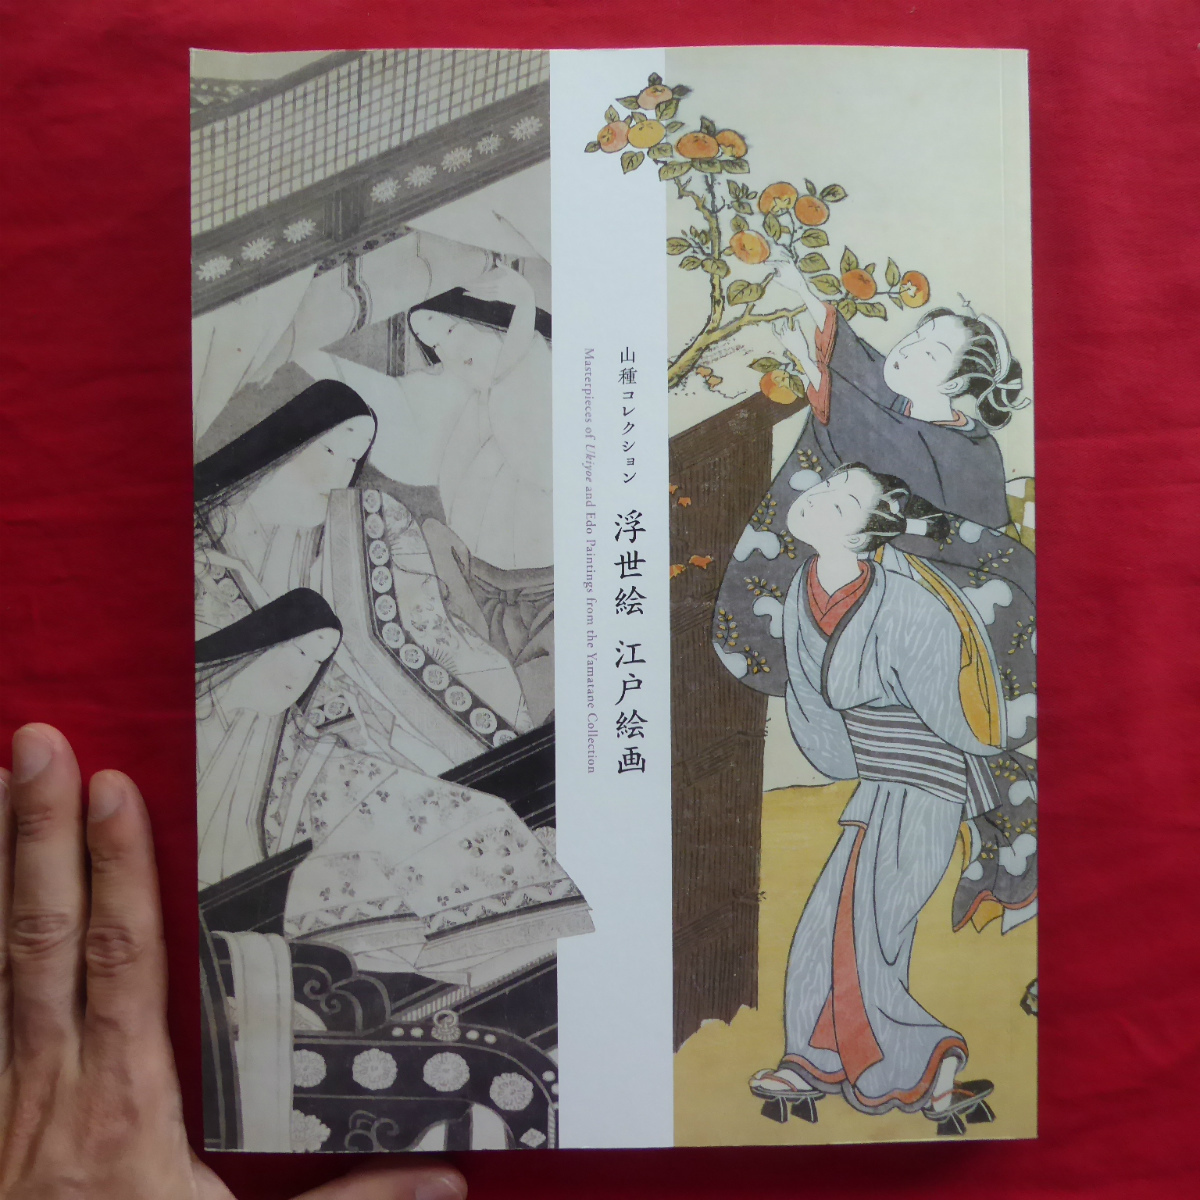 d11 Catalog [Yamatane Collection Ukiyo-e and Edo Paintings/Yamatane Museum of Art, 2010] Junichi Okubo About the Yamatane Museum of Art's Ukiyo-e Print Collection, art, Entertainment, Prints, Sculpture, Commentary, Review